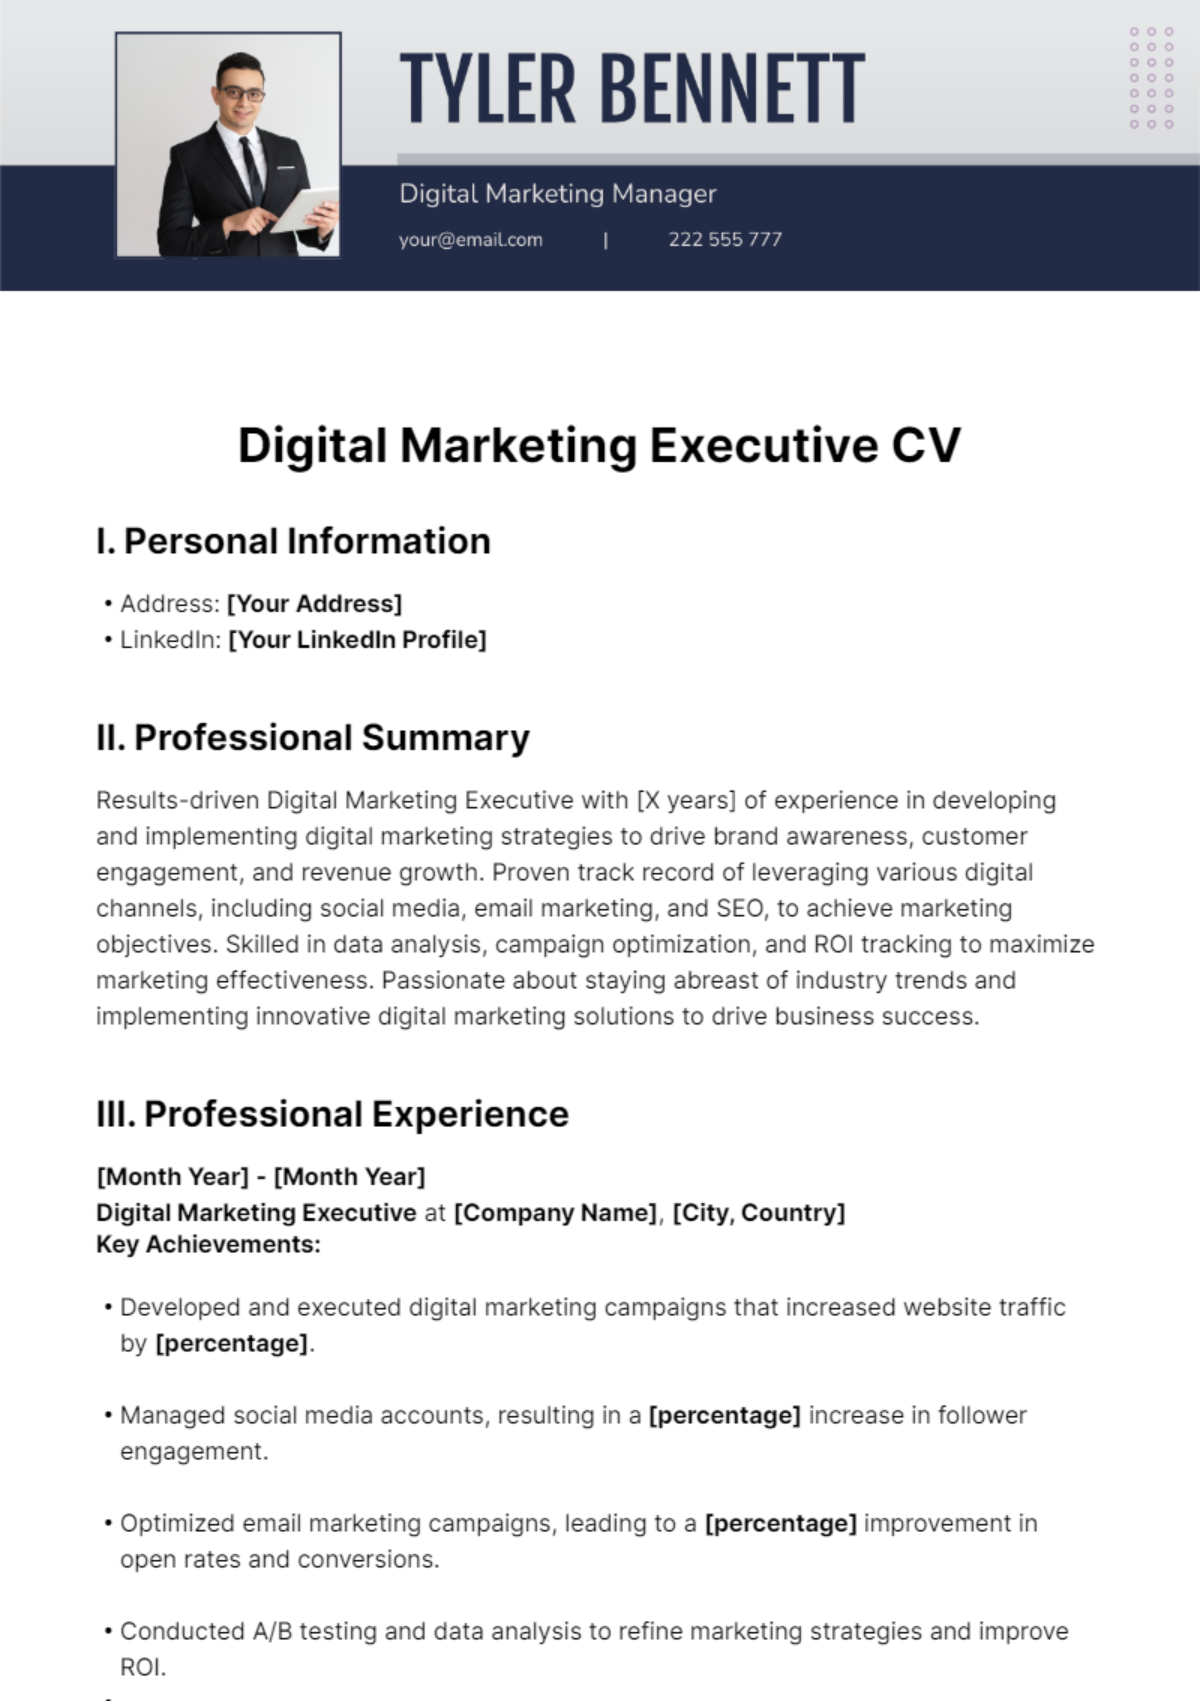 Digital Marketing Executive CV Template